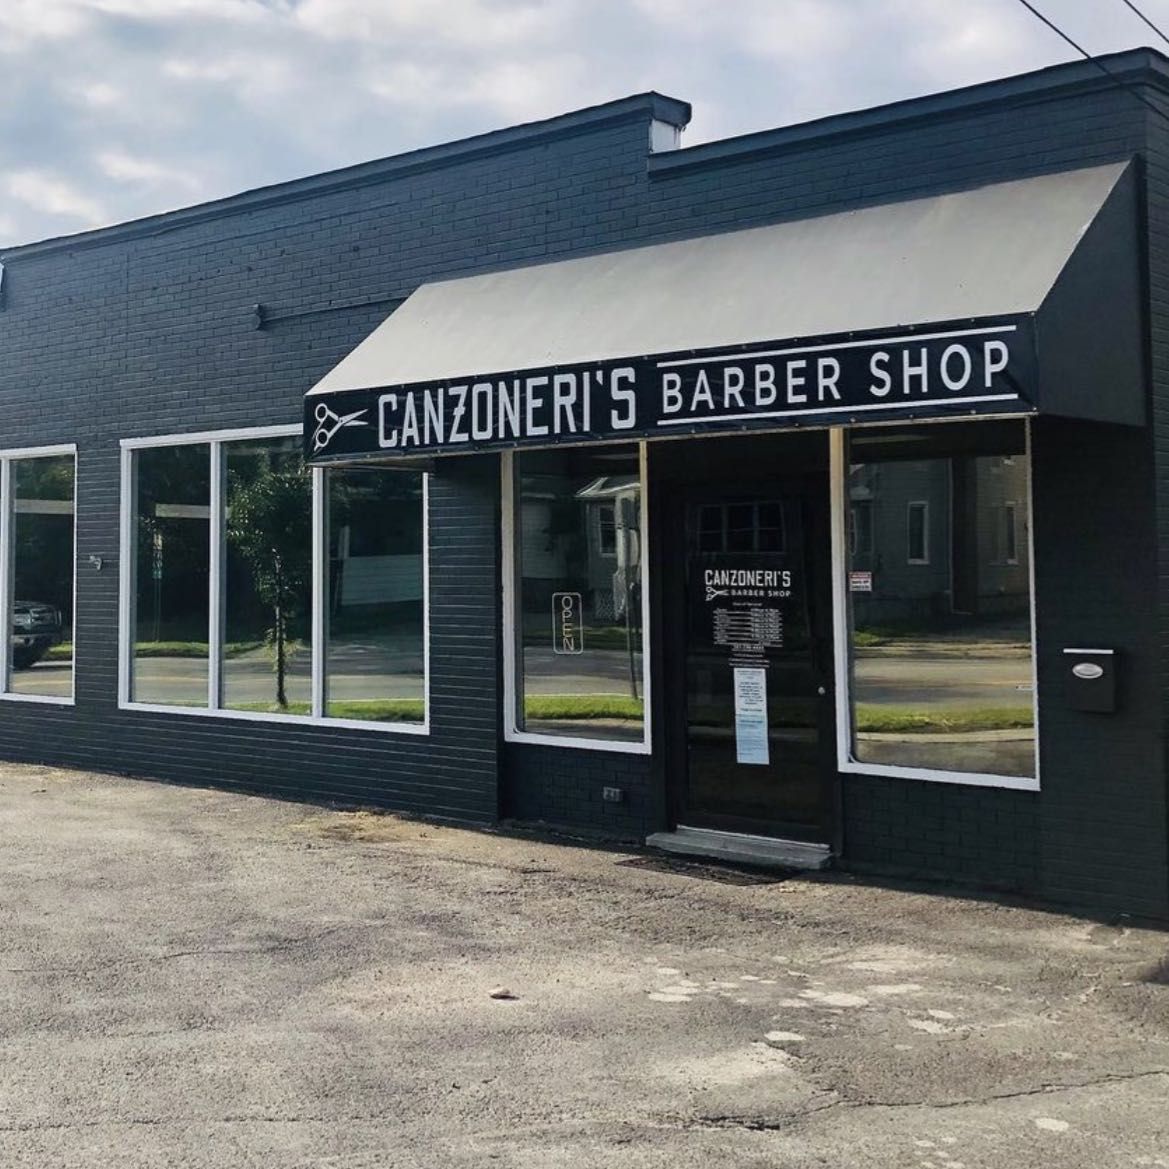 Joe Canzoneri At Canzoneri’s Barbershop, 466 ellicott street, Batavia, 14020